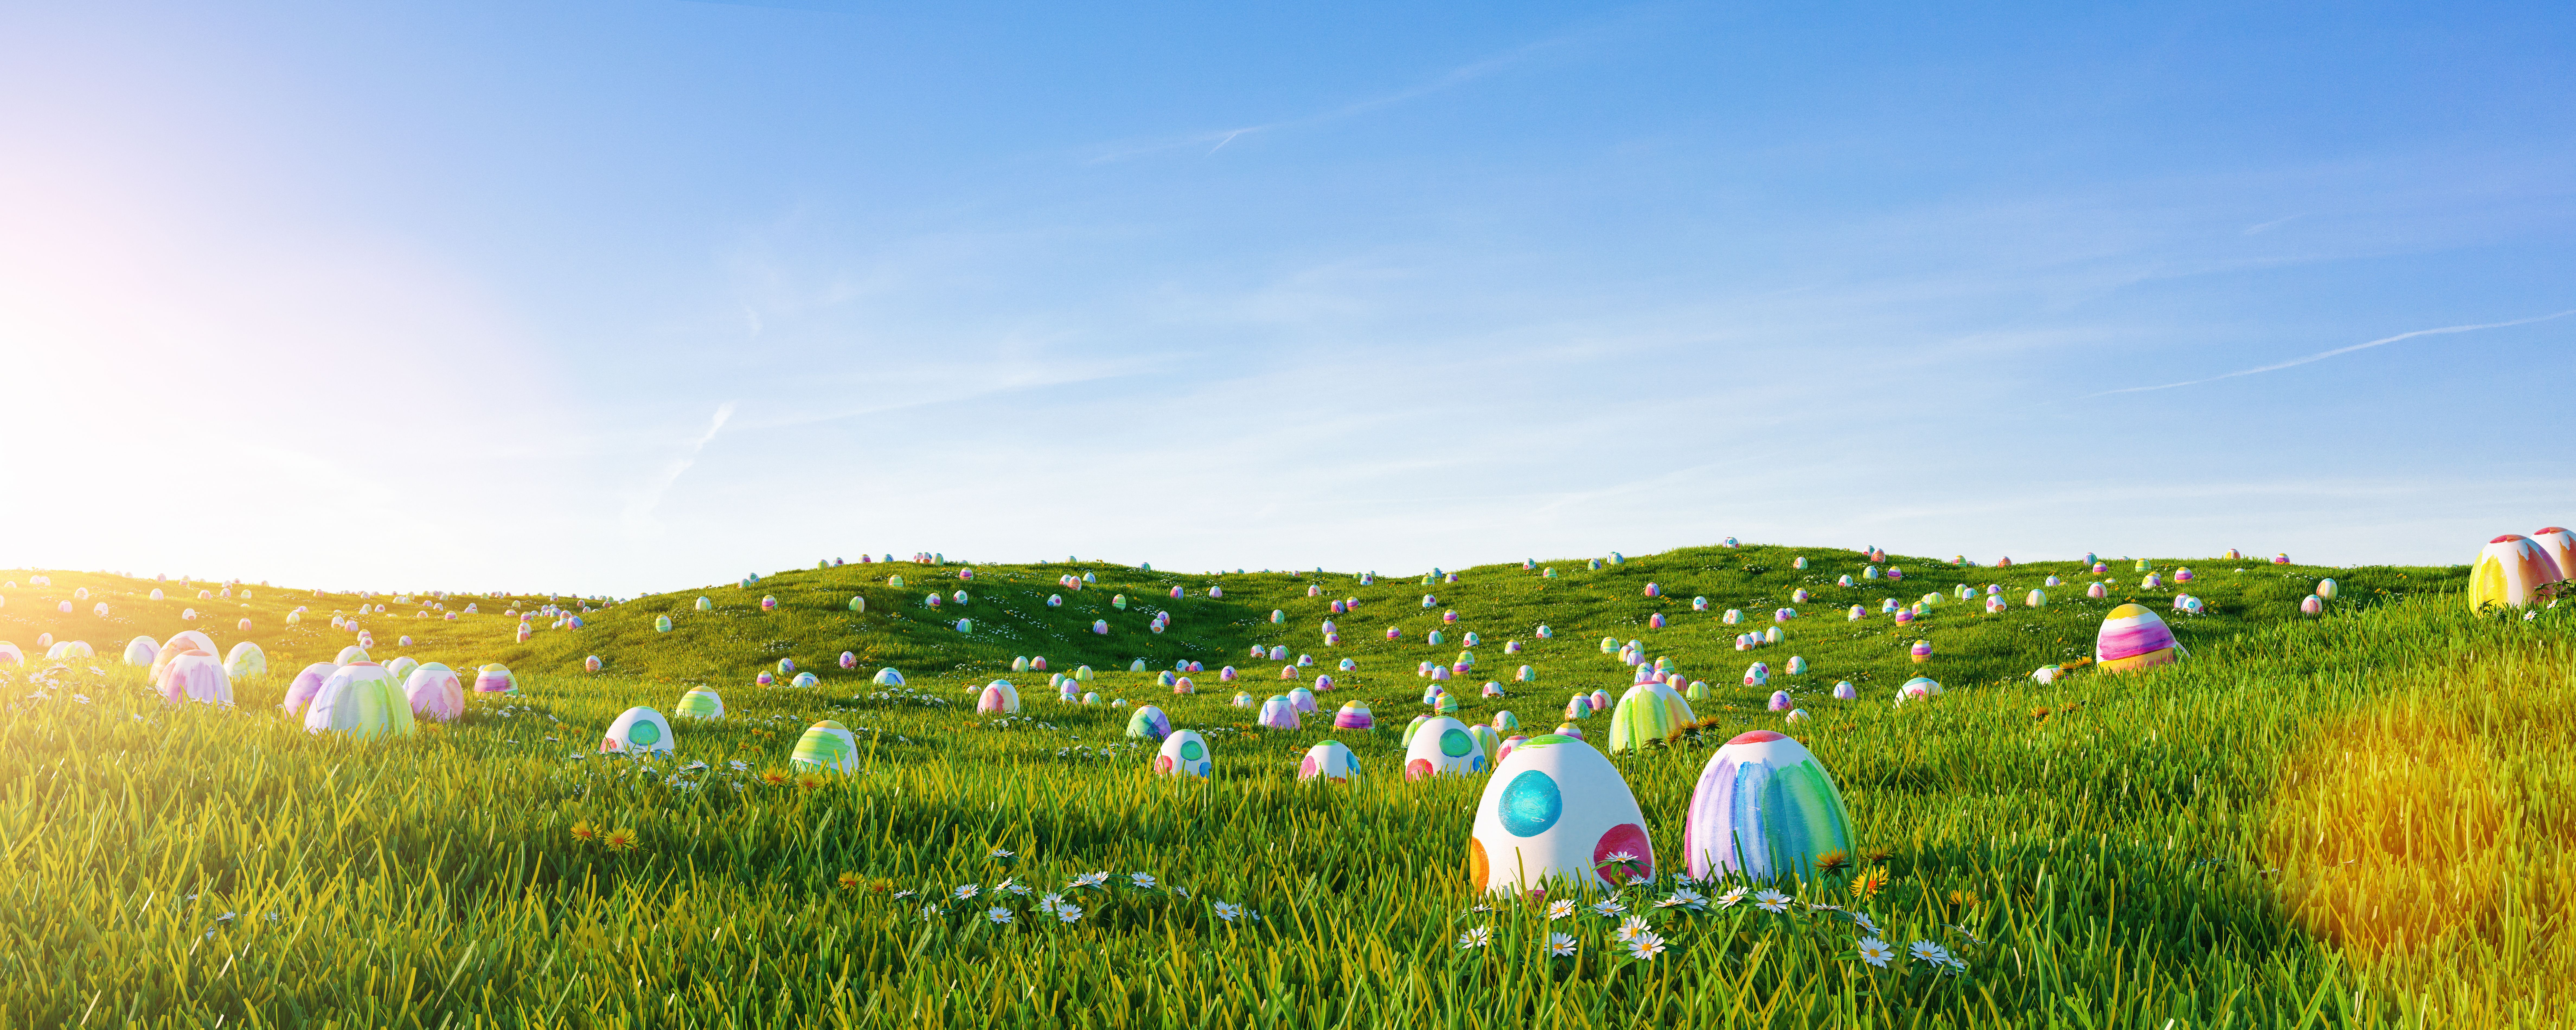 9 Eggs-cellent Fundraising Ideas For Easter